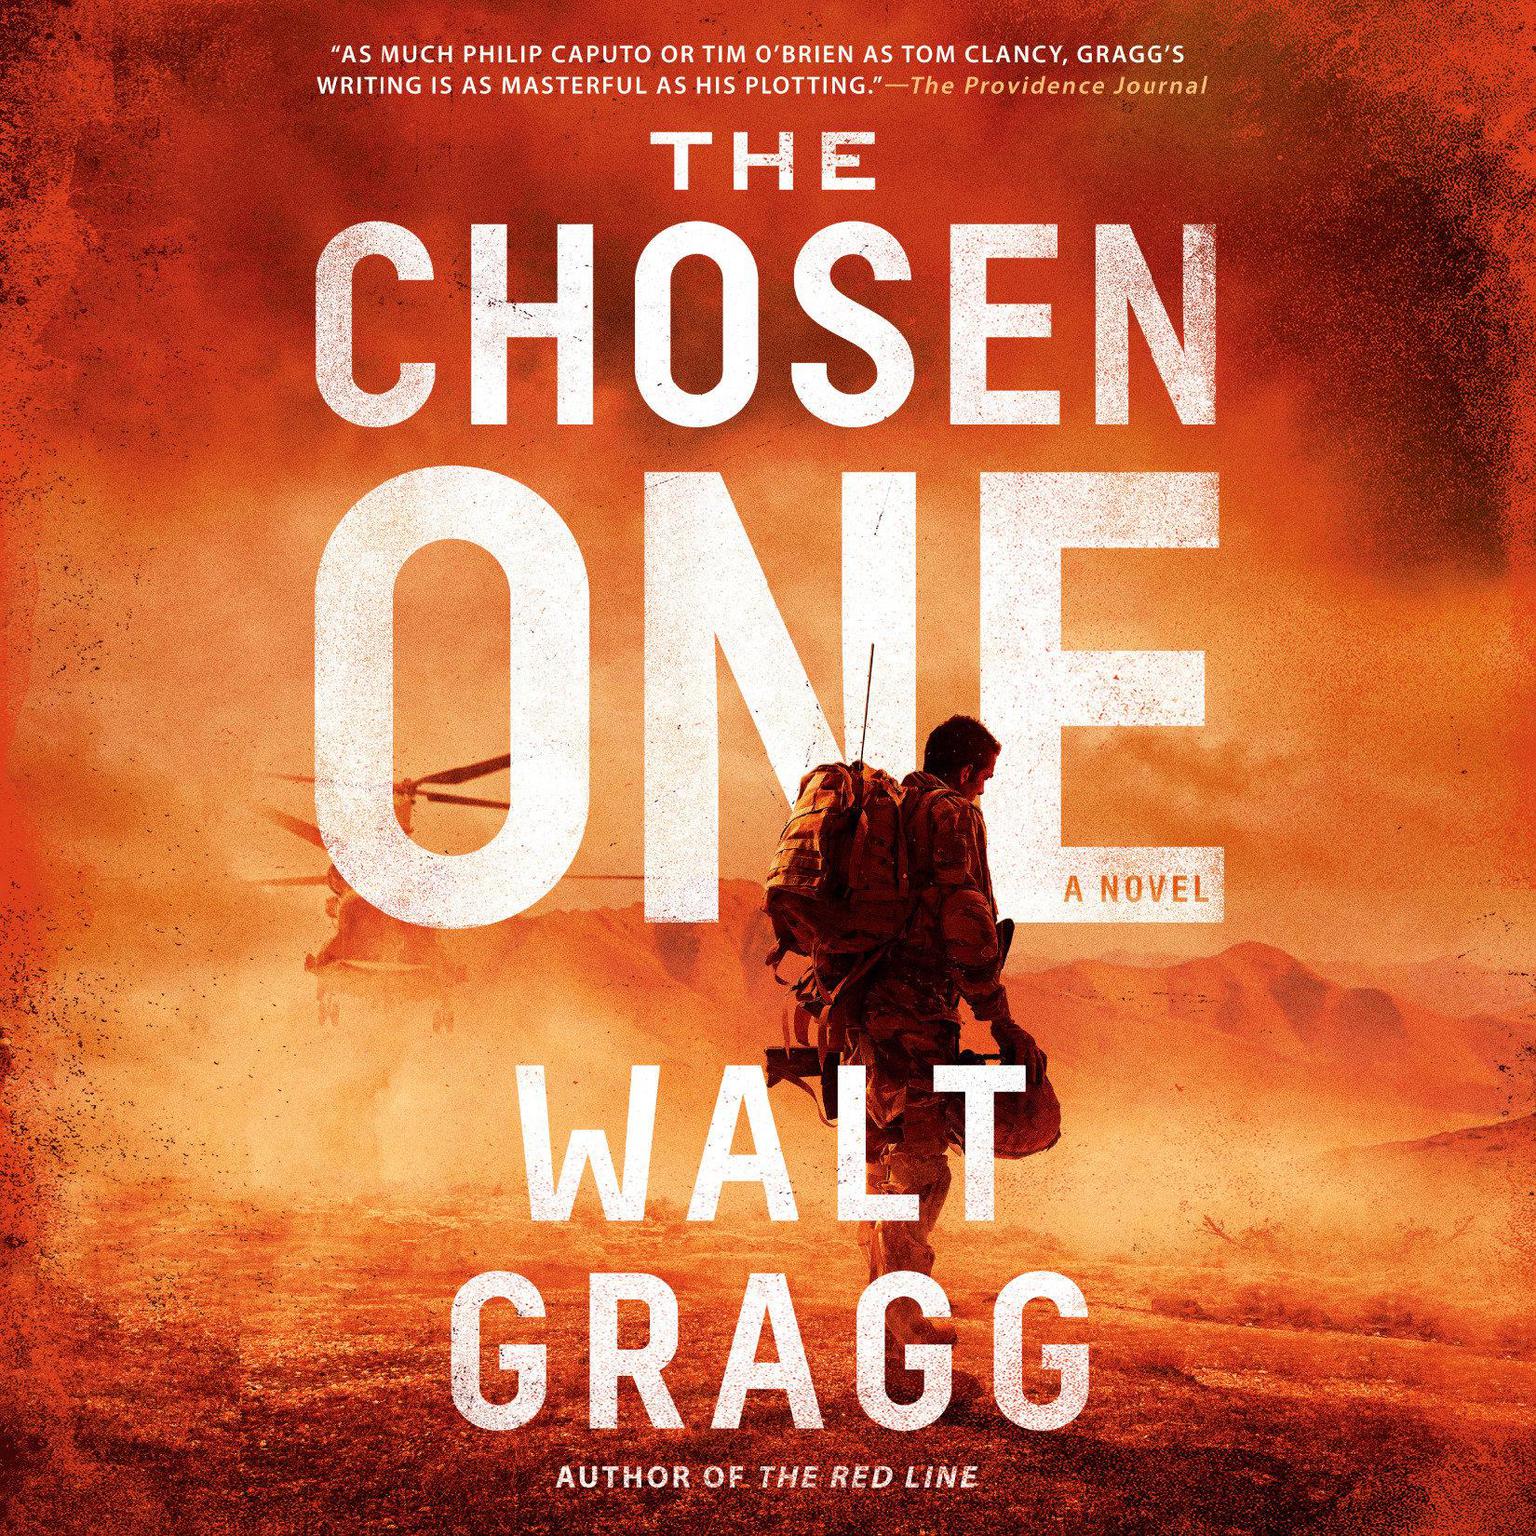 The Chosen One Audiobook, by Walt Gragg